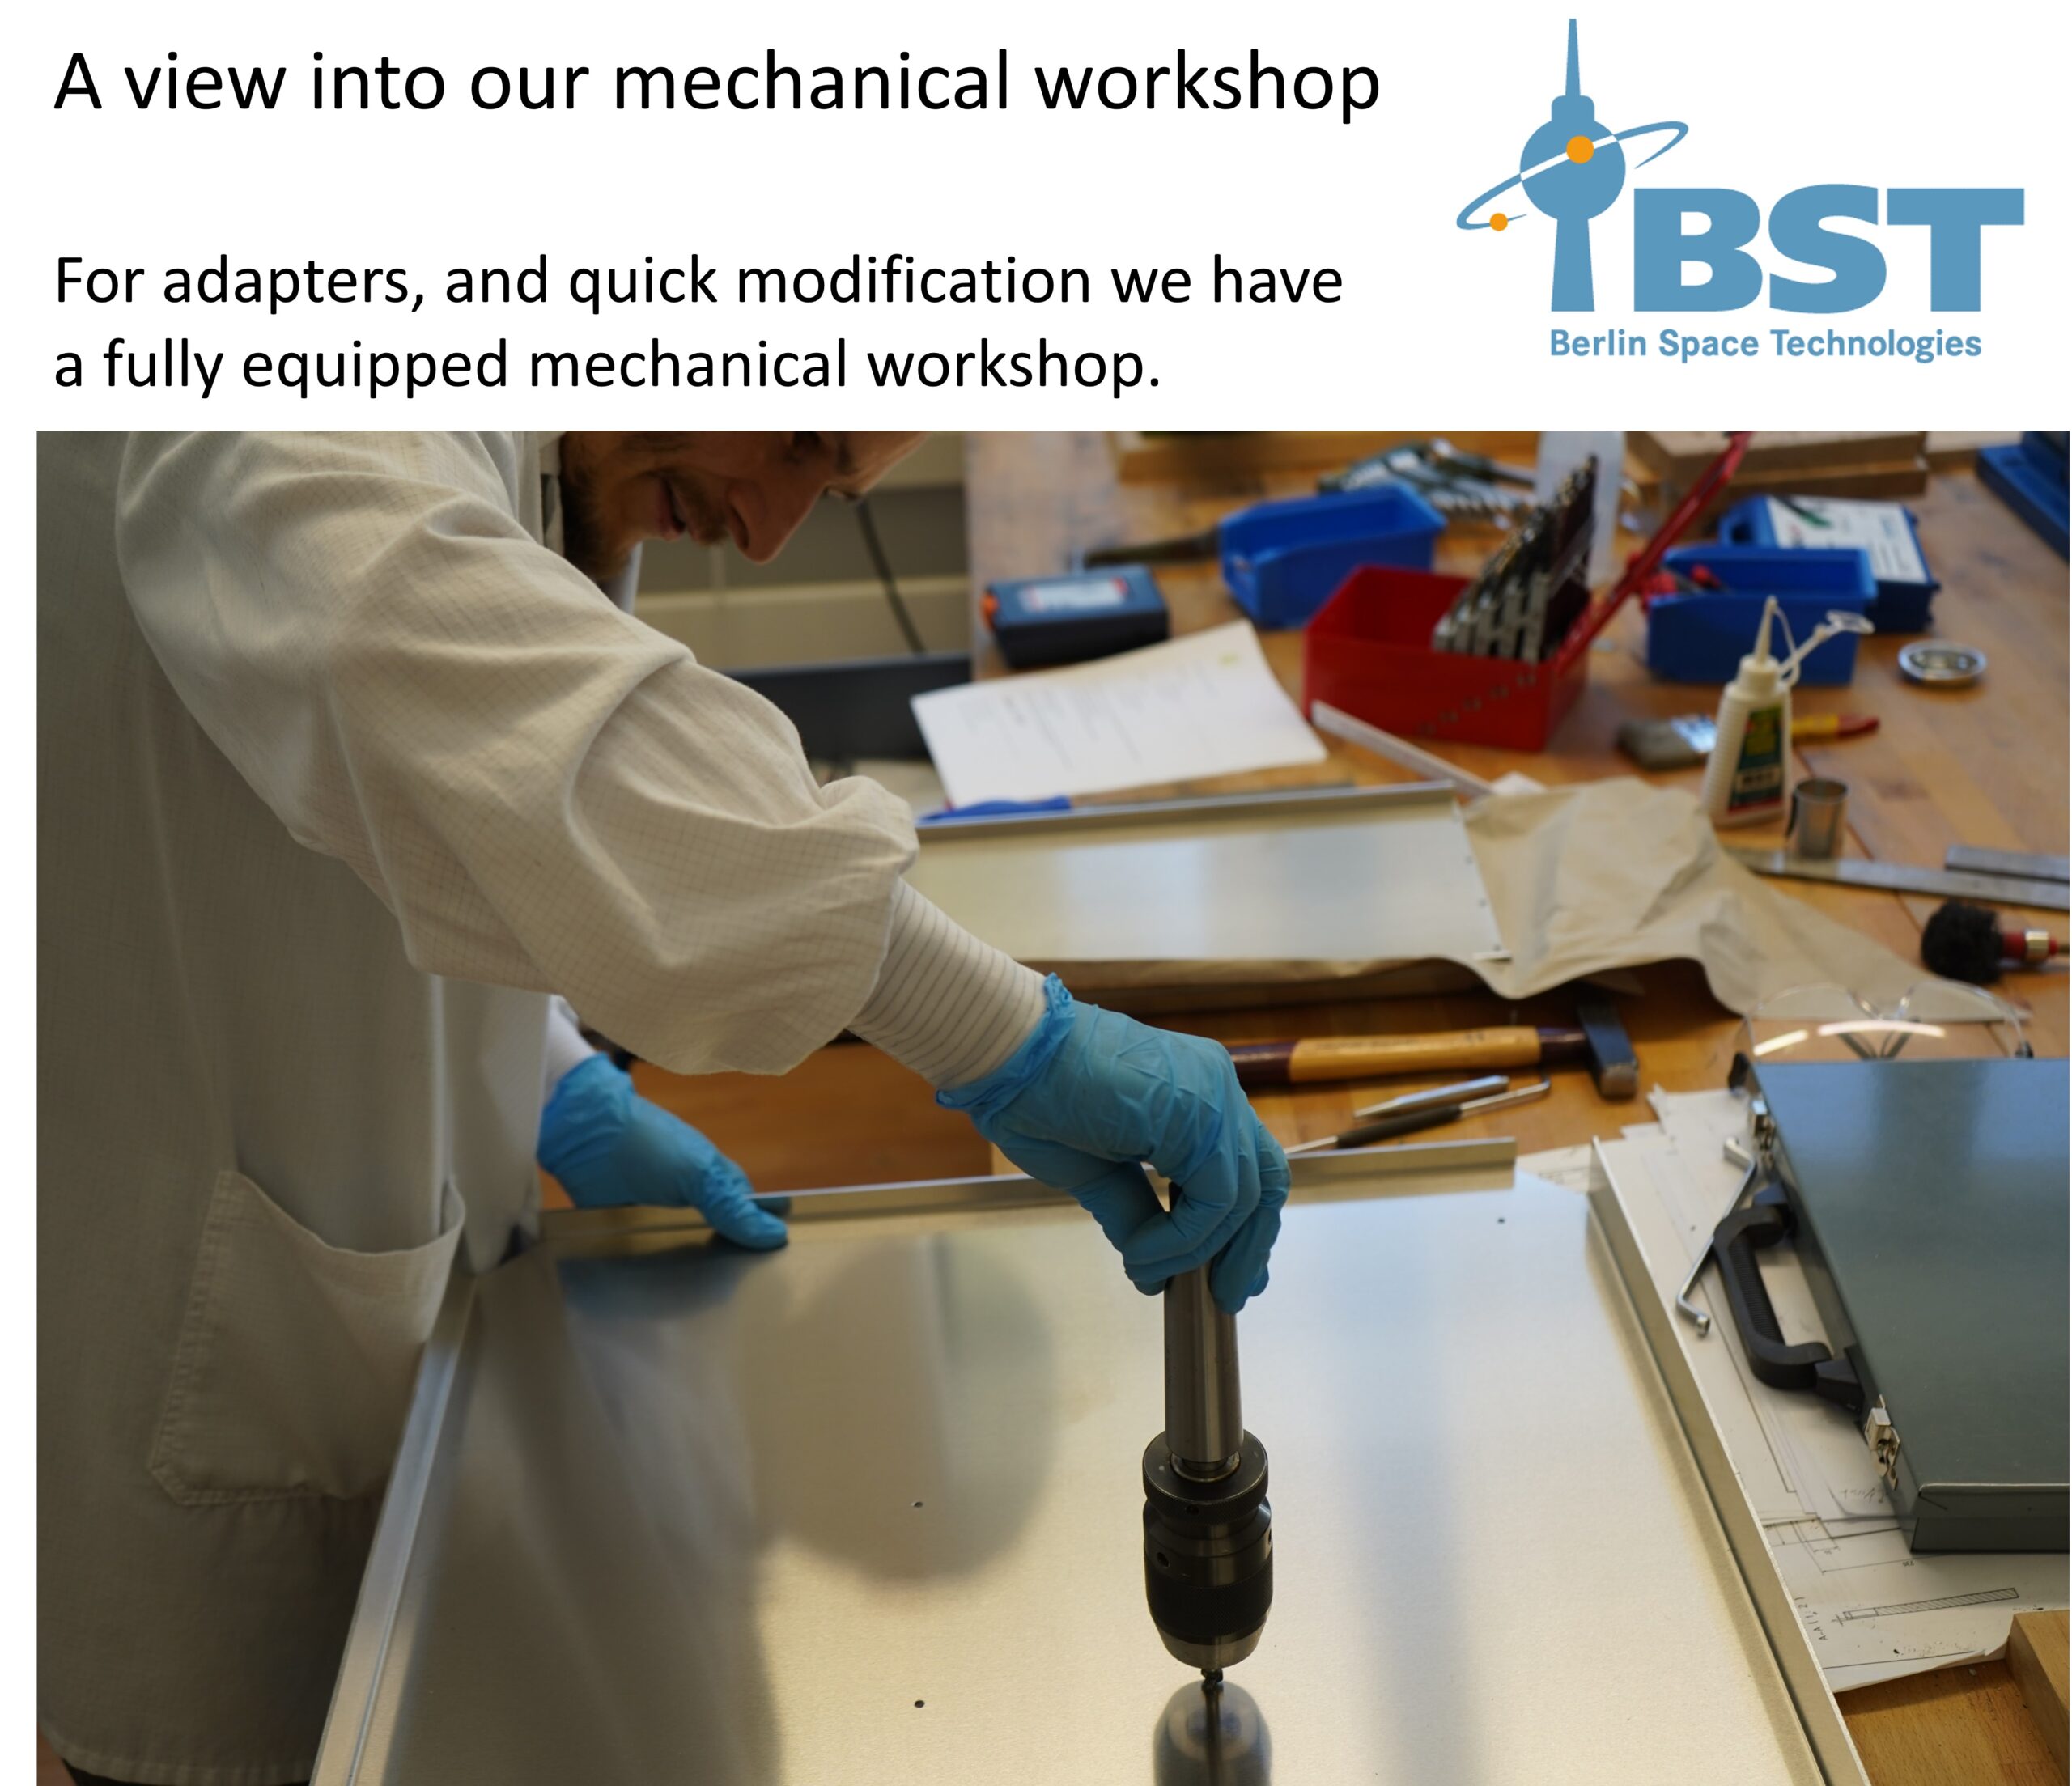 Our Mechanical Workshop